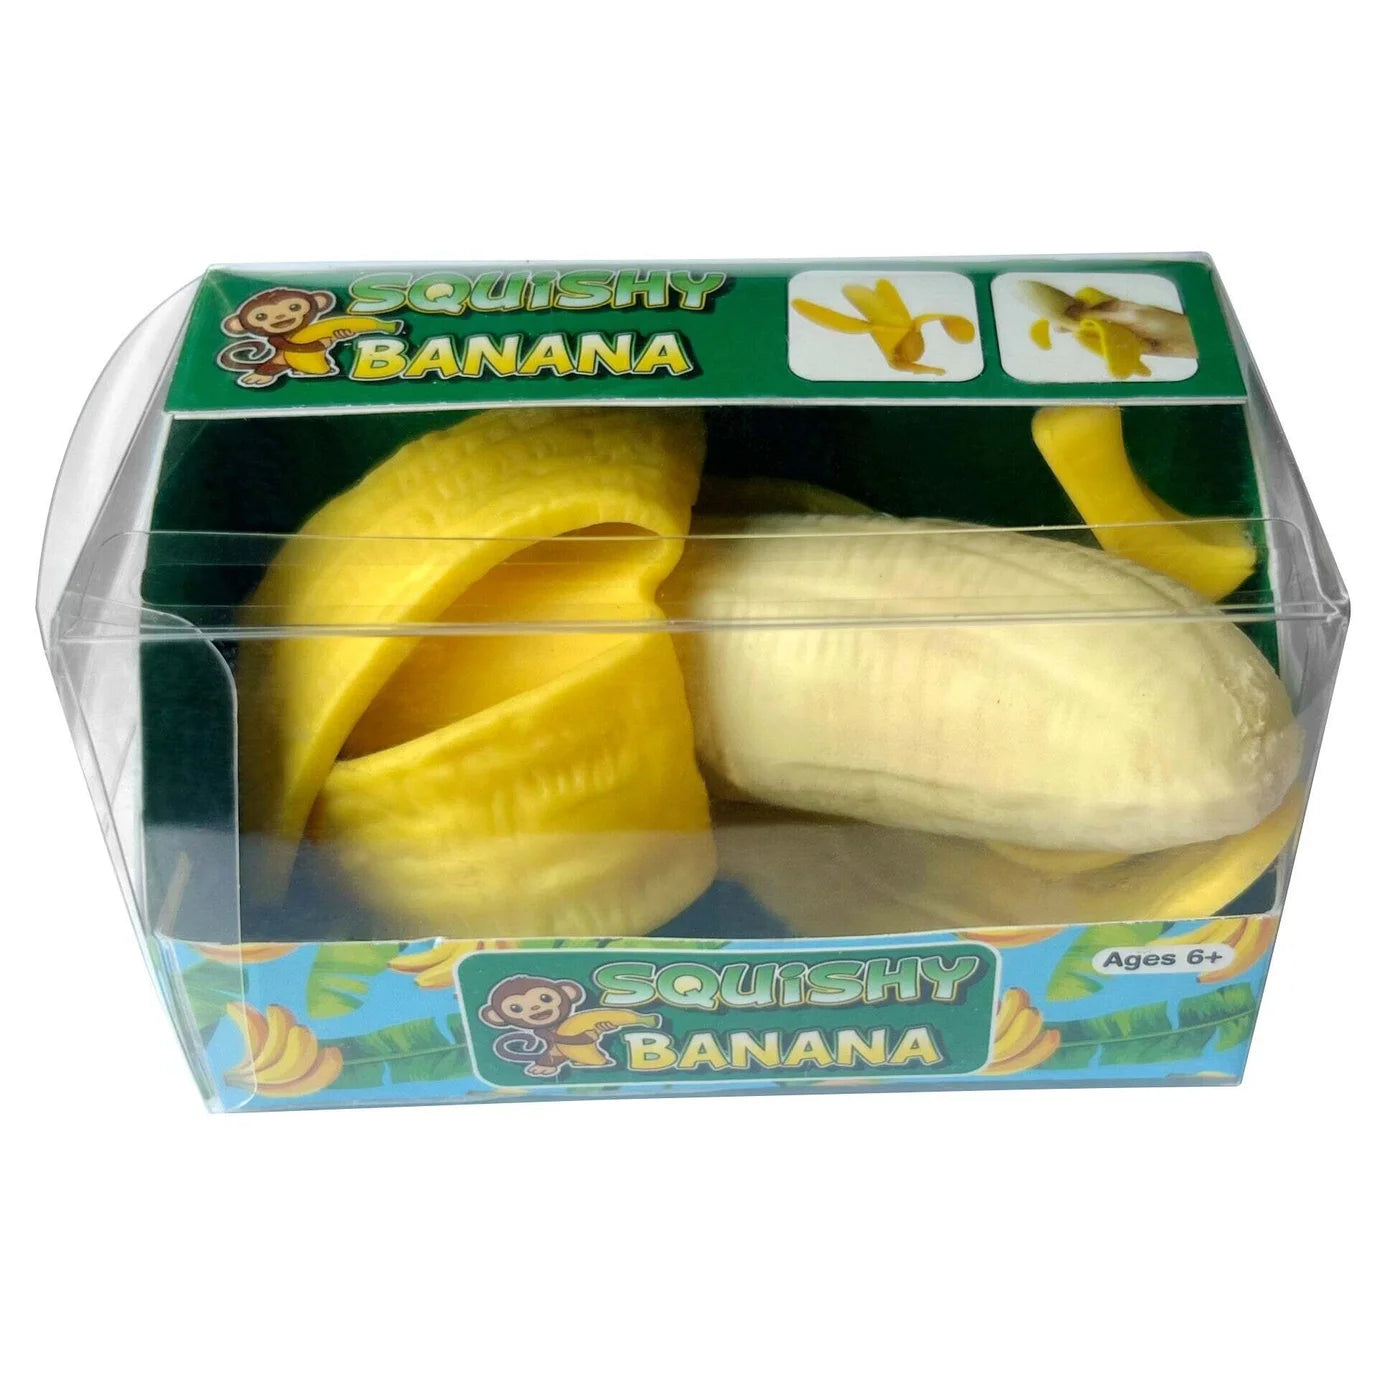 squishy banana package